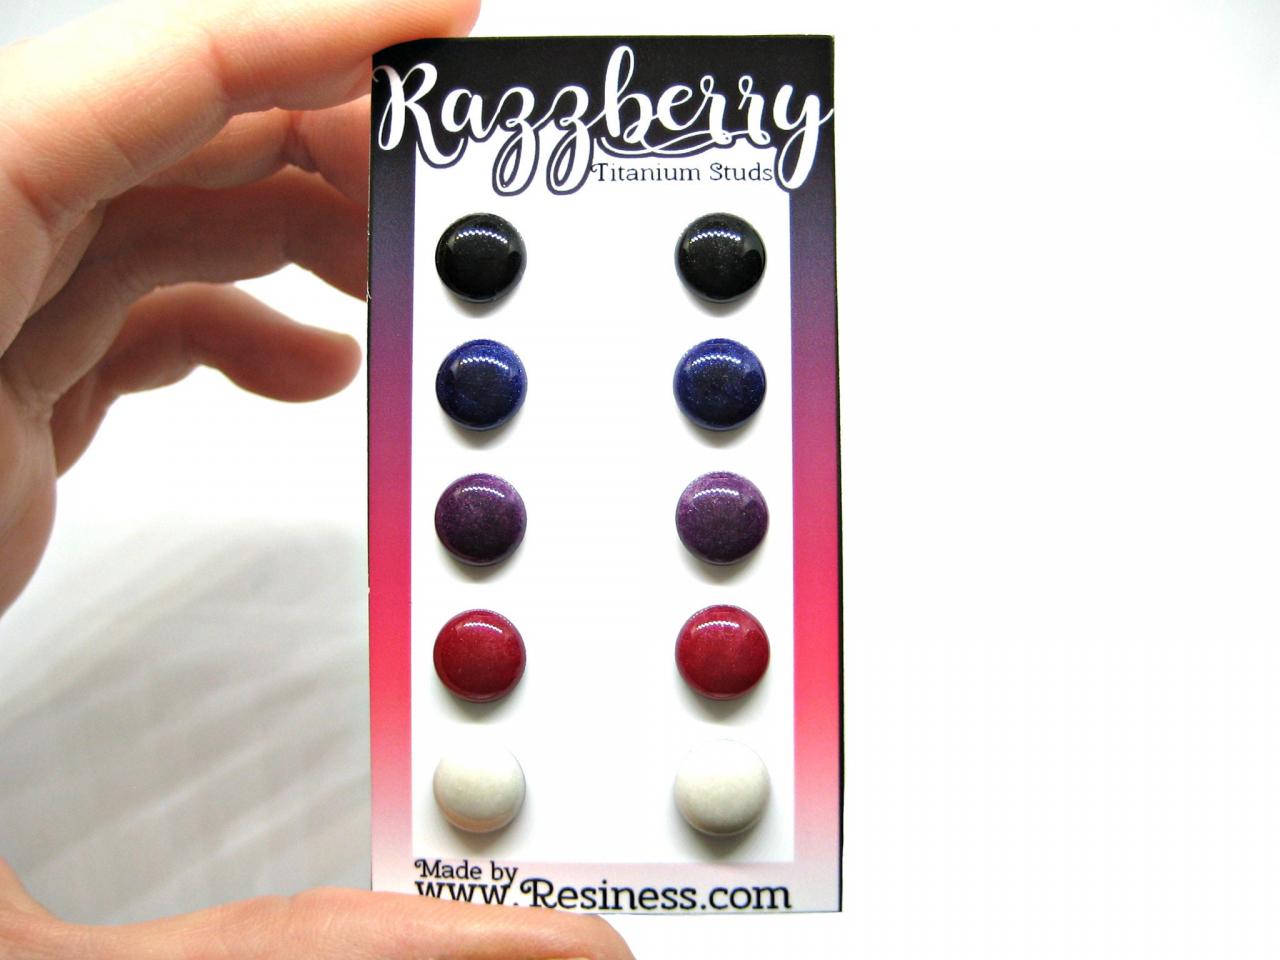 Razzberry Stud Earring Set, 5 Pair Set, Purple/black/white Stud Set, Hypoallergenic Posts, Pure Titanium Studs, Unique Gift Idea, Canadian